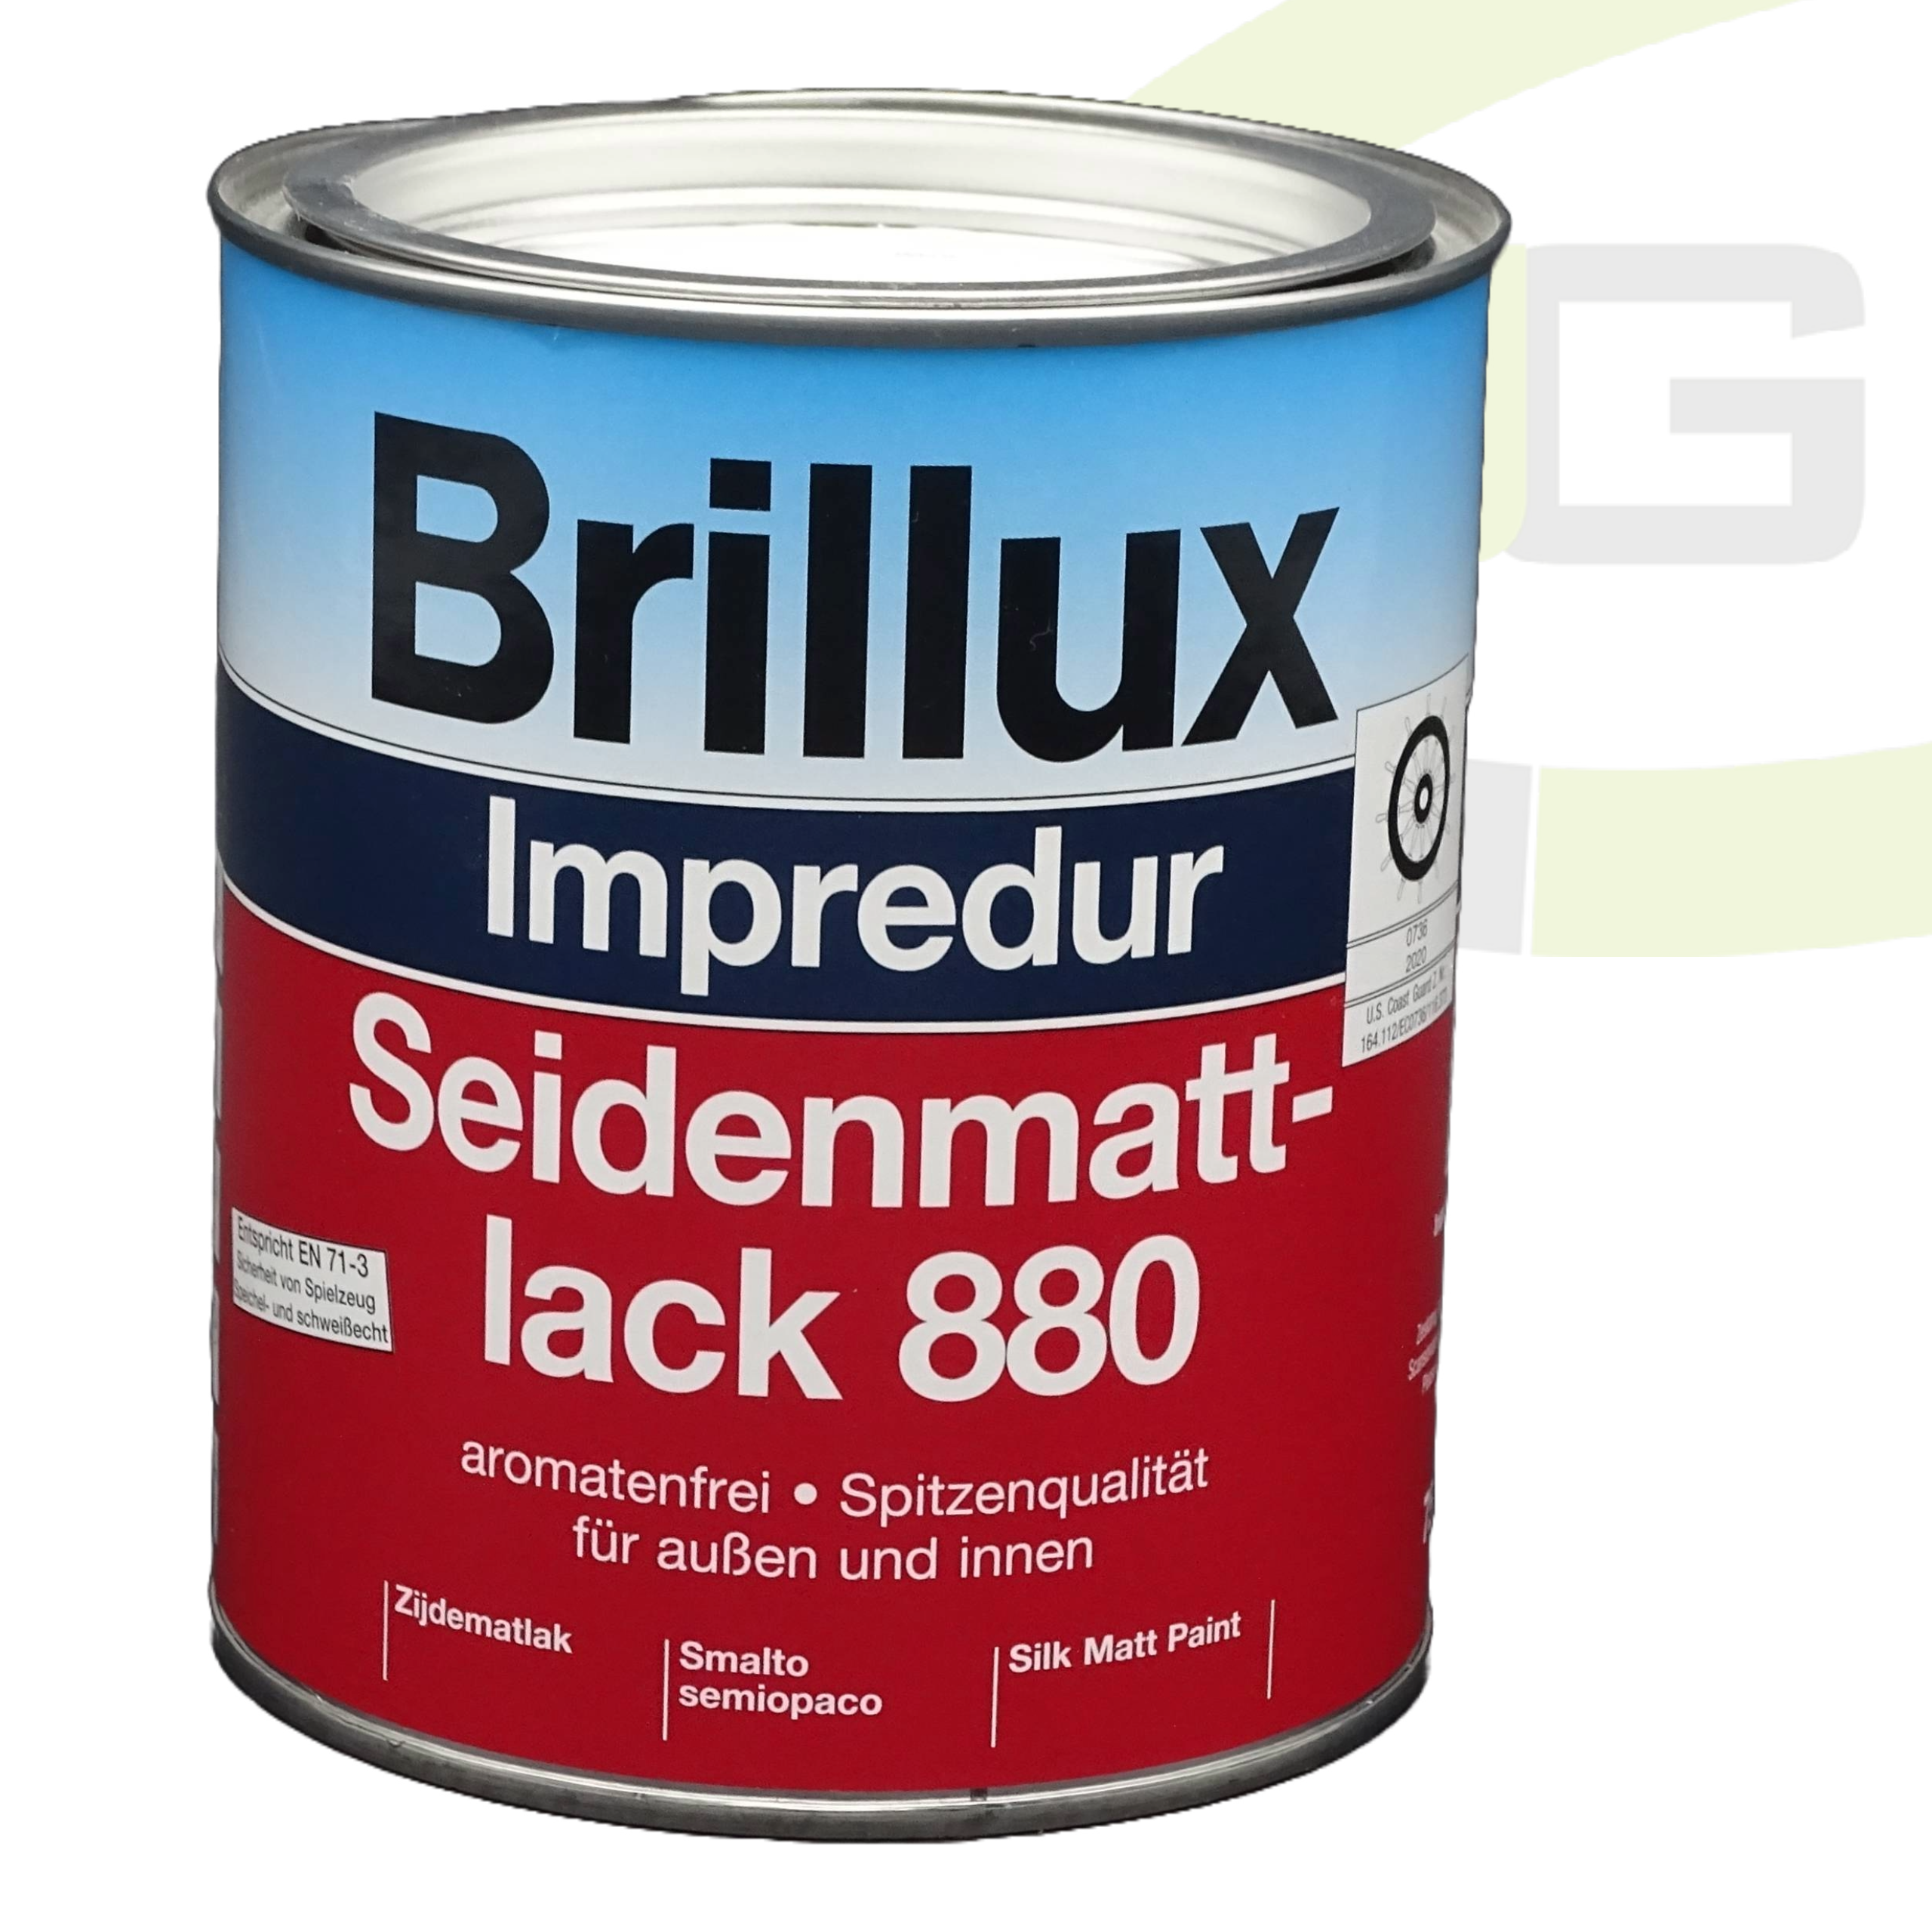 Brillux Impredur Seidenmattlack 880 - 750 ml / Lösungsmittelhaltiger Endlack